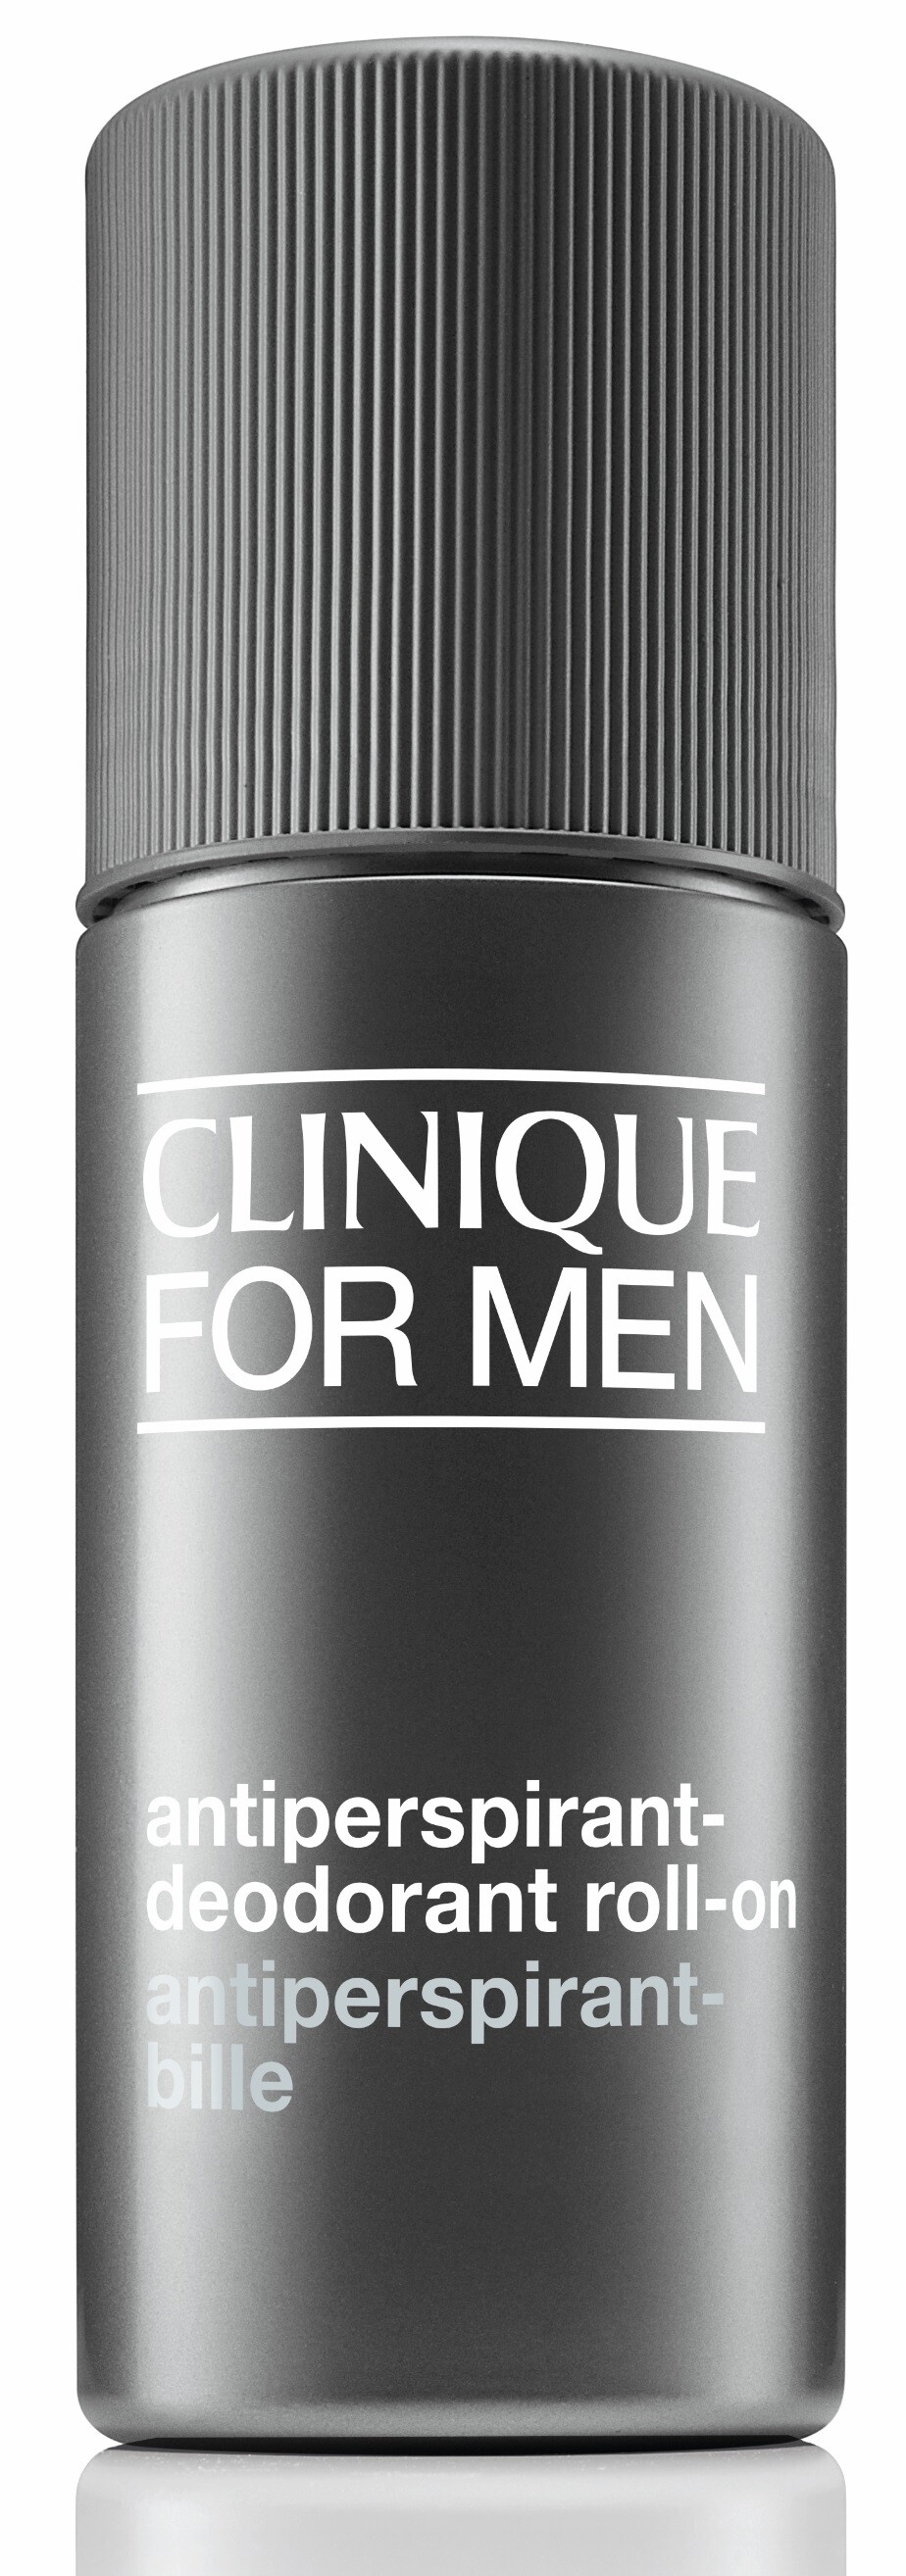 Clinique For Men™ Antiperspirant-Deodorant Roll-On